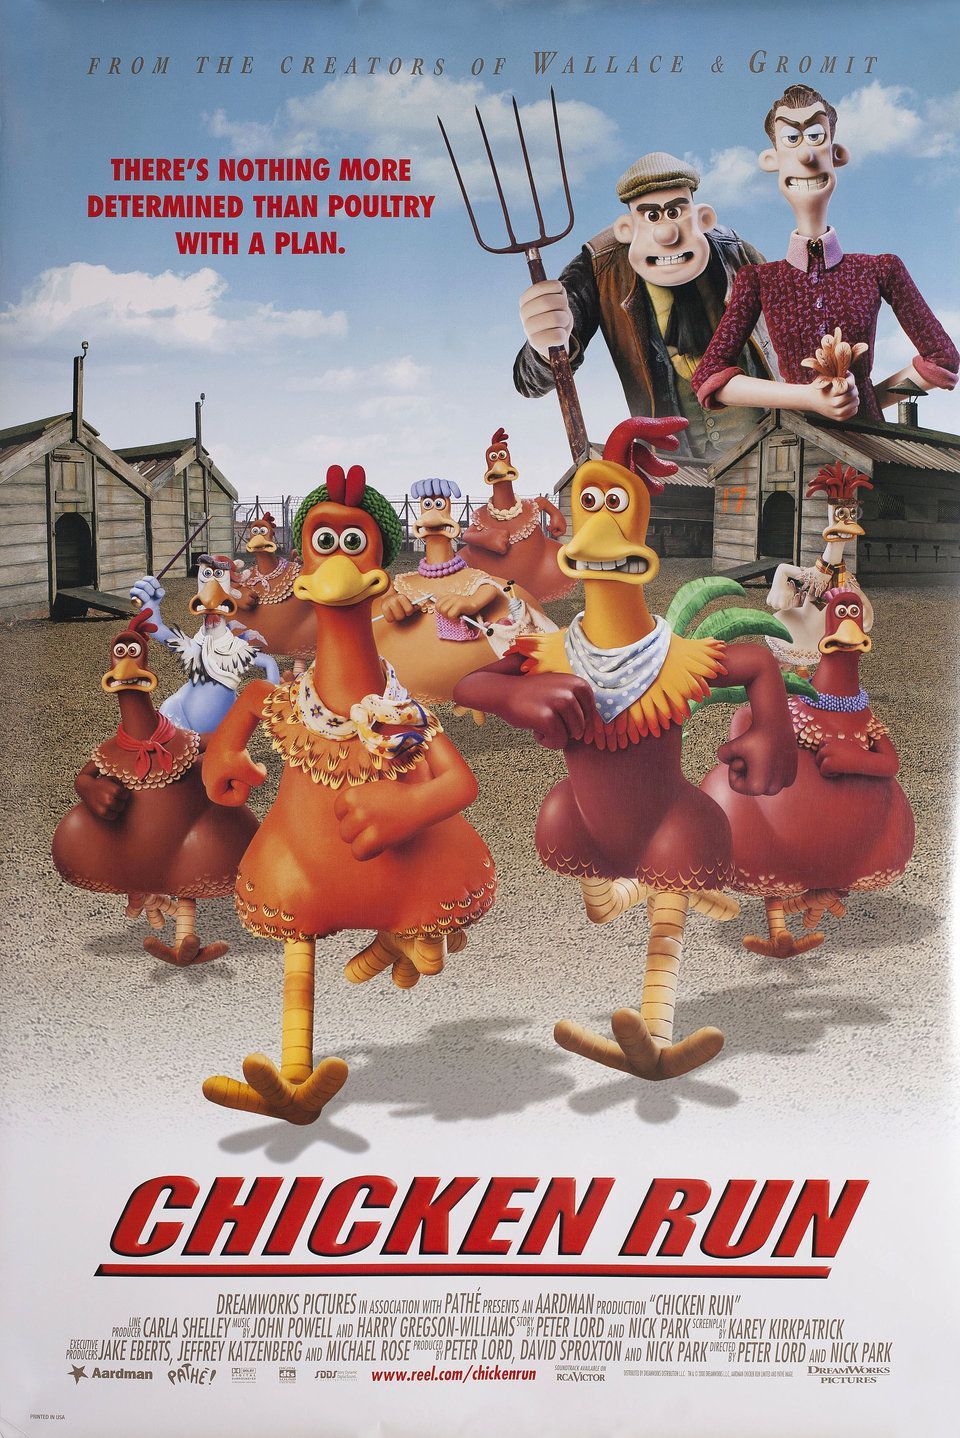 Chicken Run 2000 U.S. One Sheet Poster. Posteritati Movie Poster Gallery. New York. Chicken run movie, Chicken runs, Movie posters